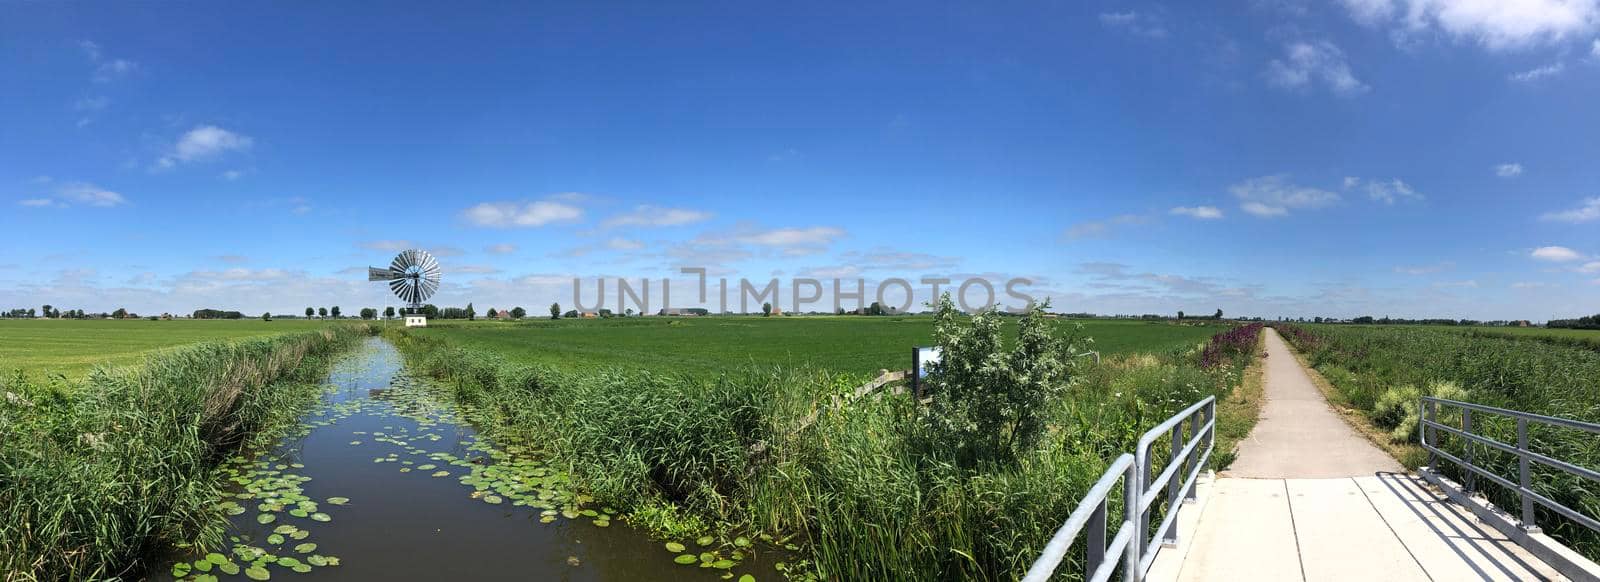 Canal and windmill around the village Boazum in Friesland The Netherlands